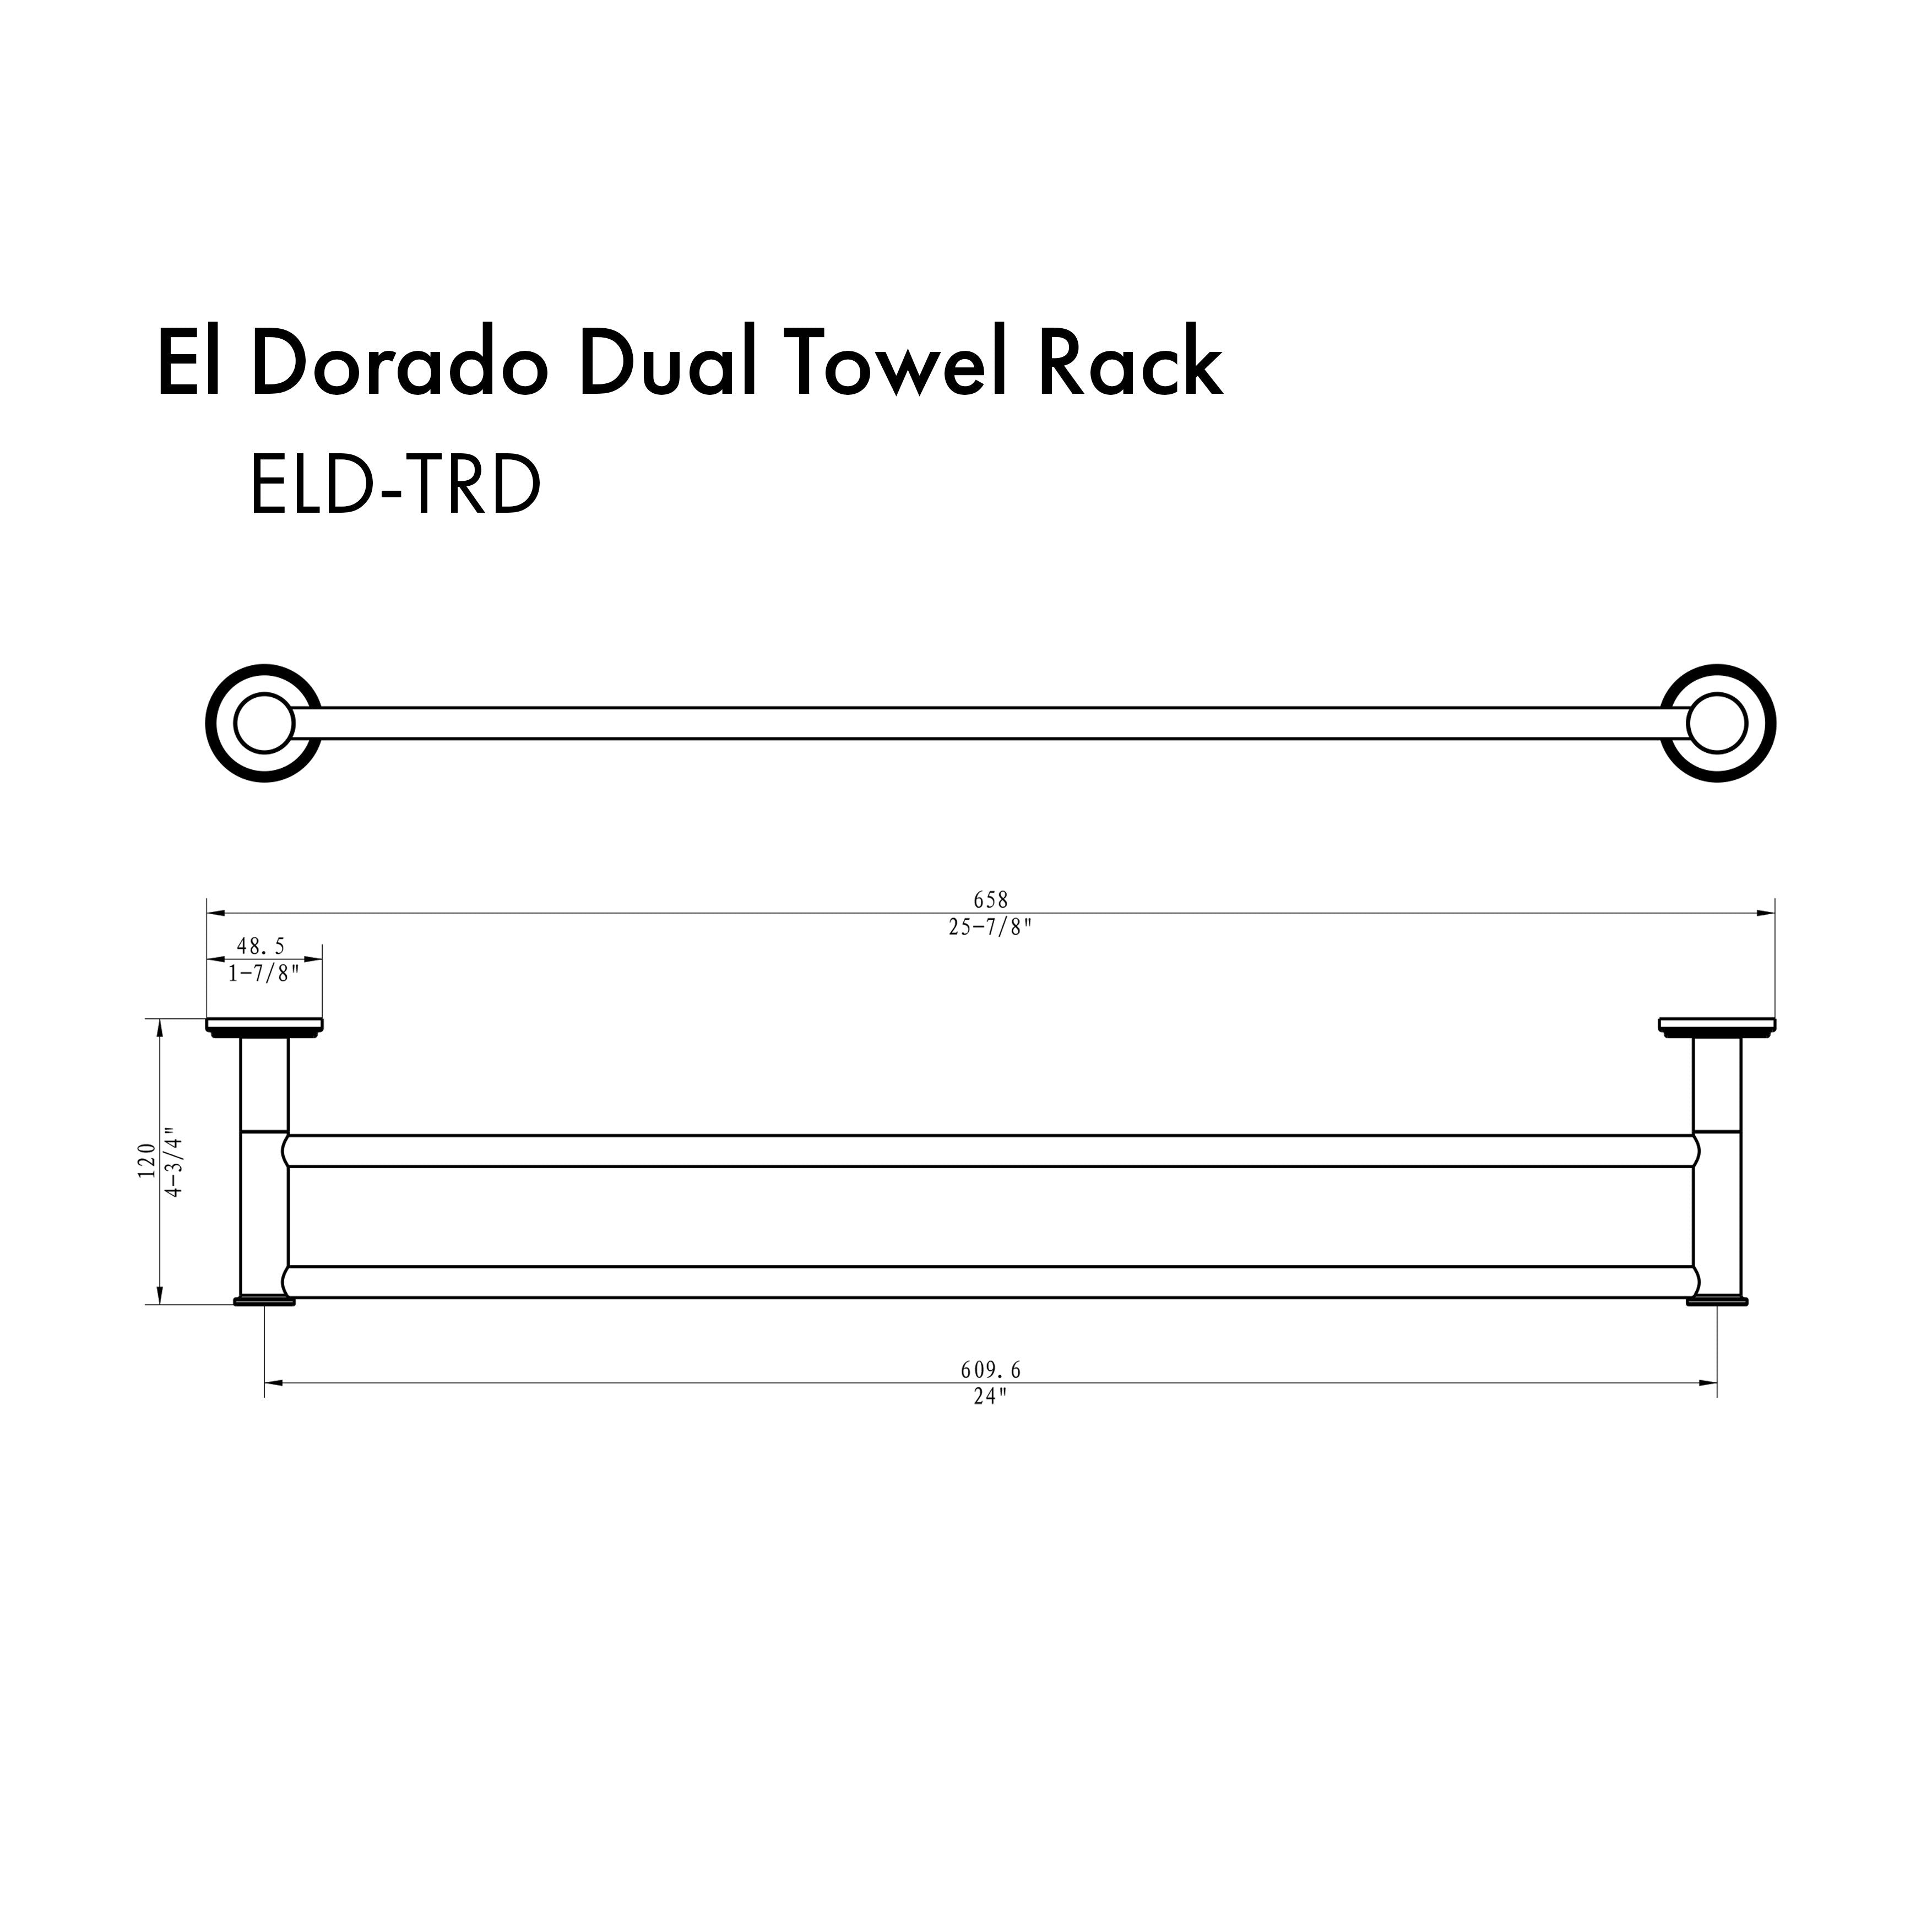 Therangehoodstore.com, ZLINE El Dorado Double Towel Rail with color options (ELD-TRD), ELD-TRD-BN,